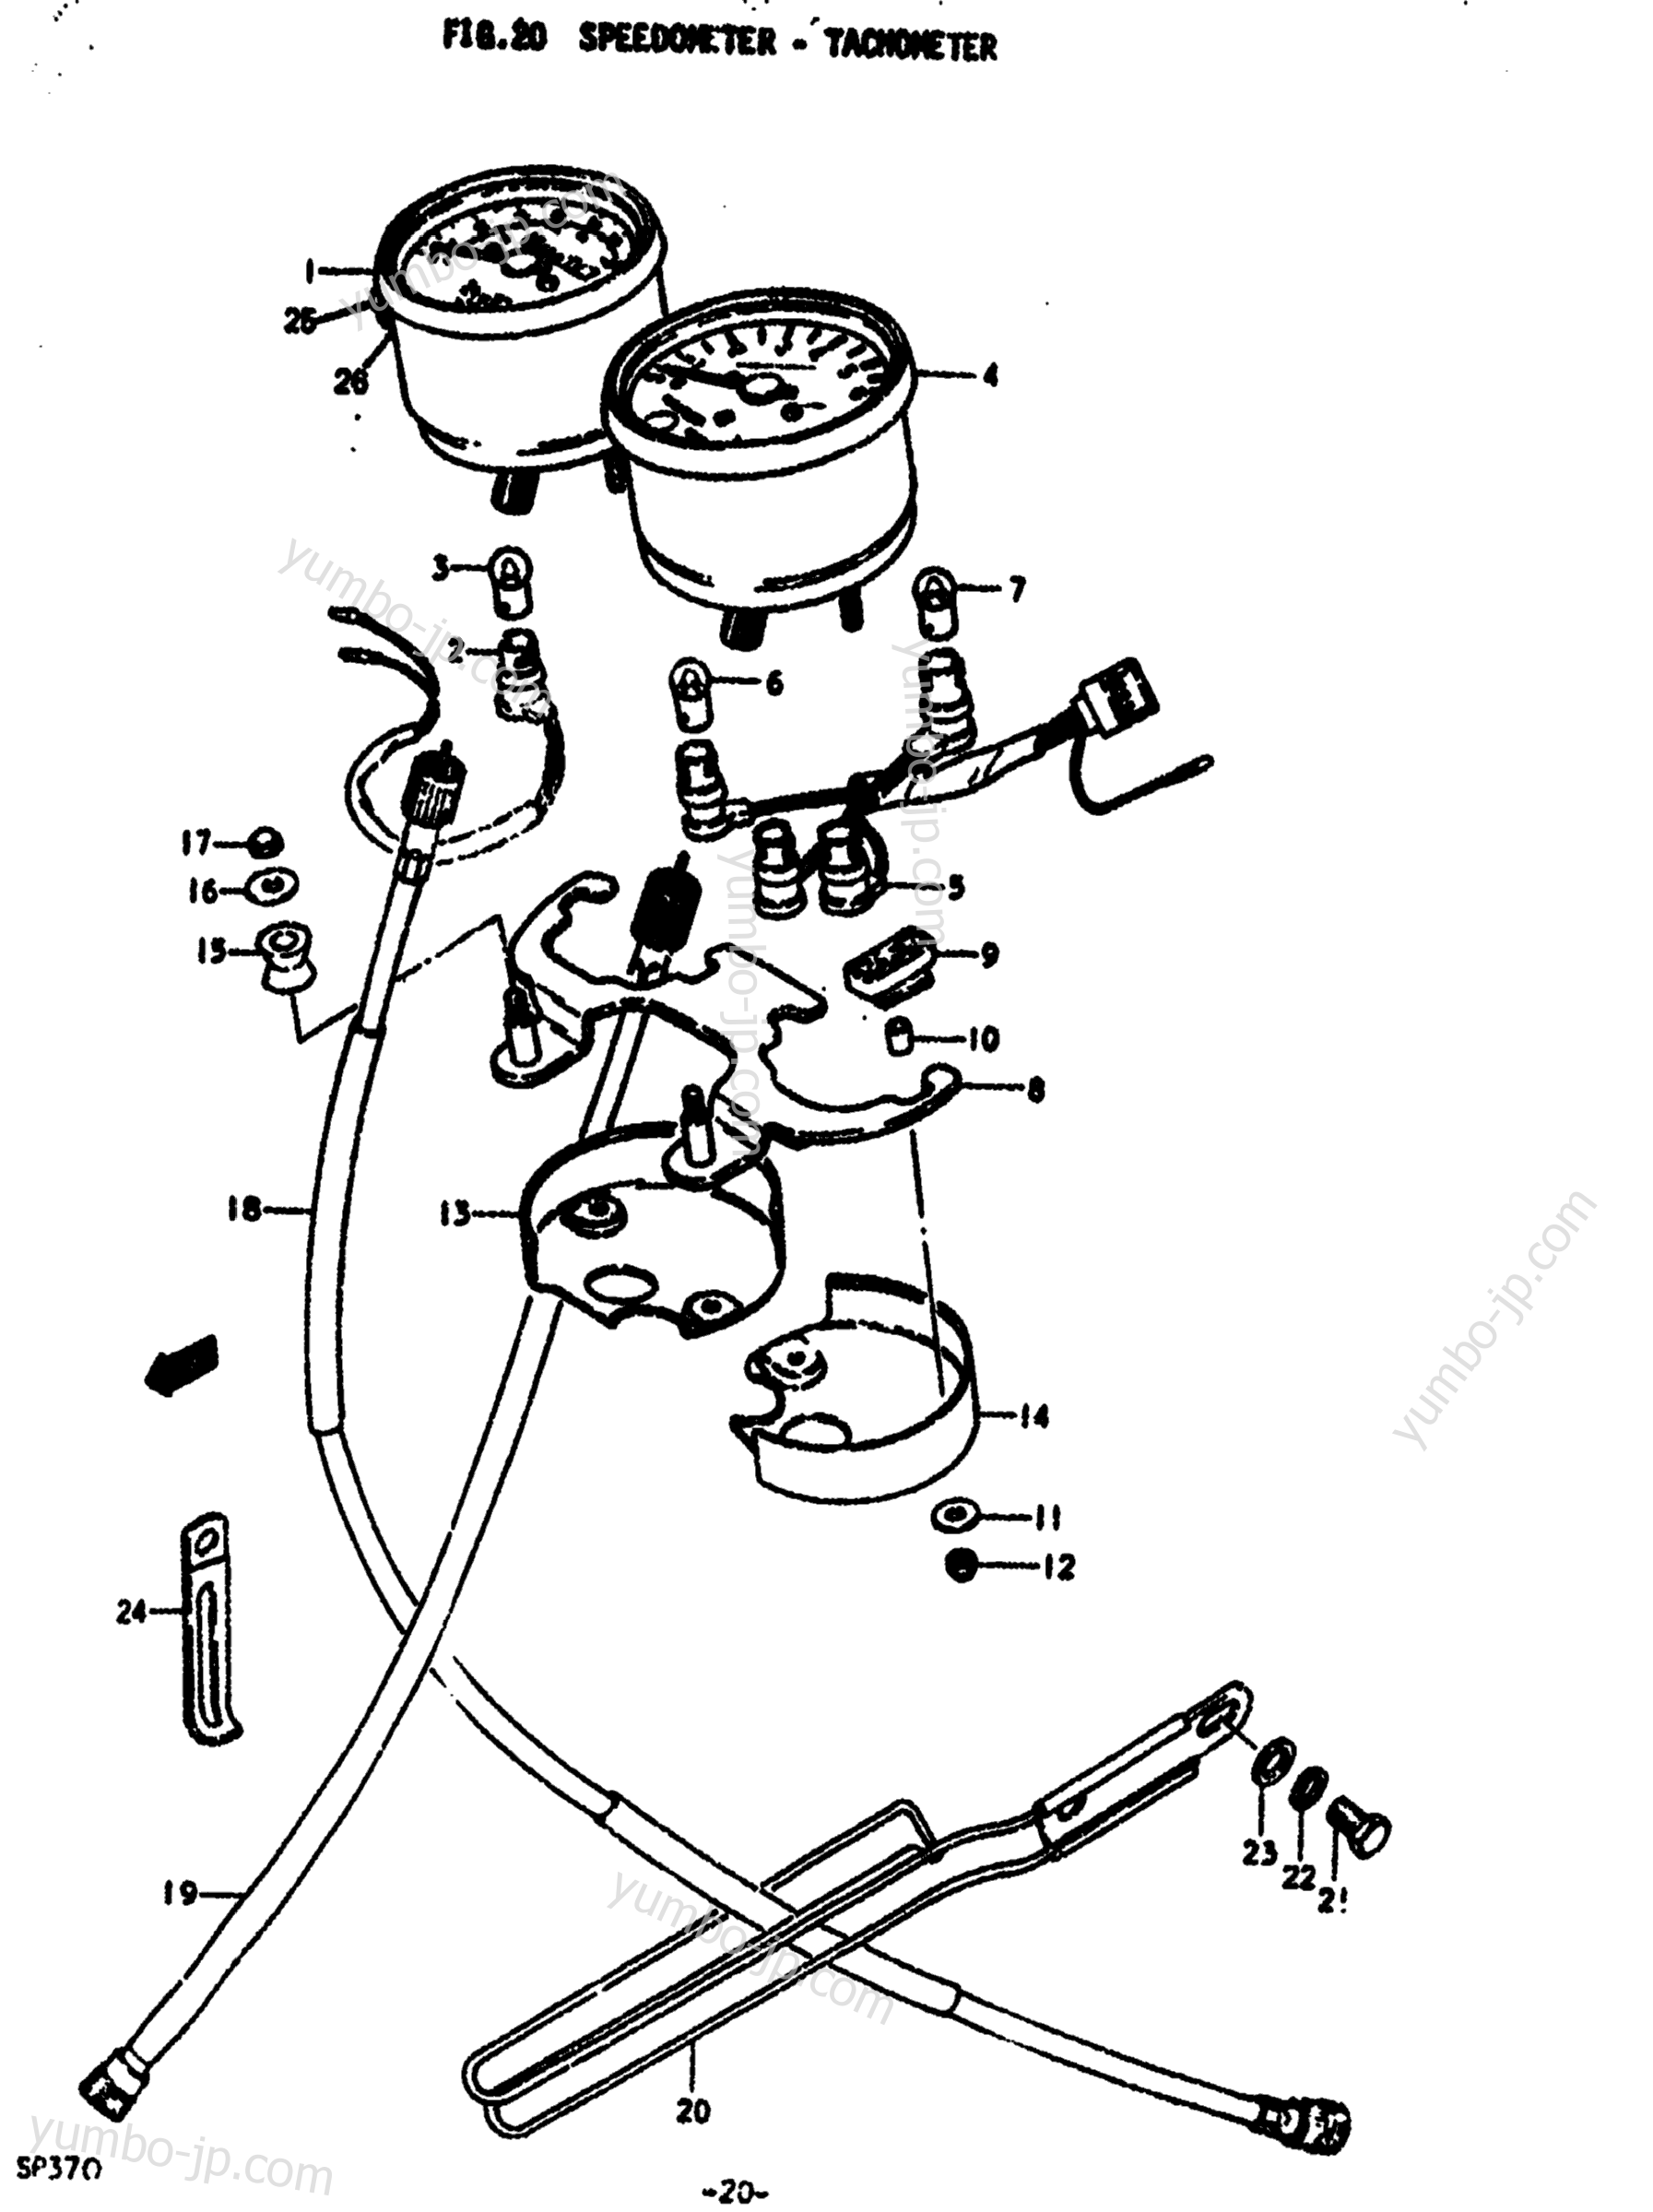 Speedometer - Tachometer для мотоциклов SUZUKI SP370 1979 г.